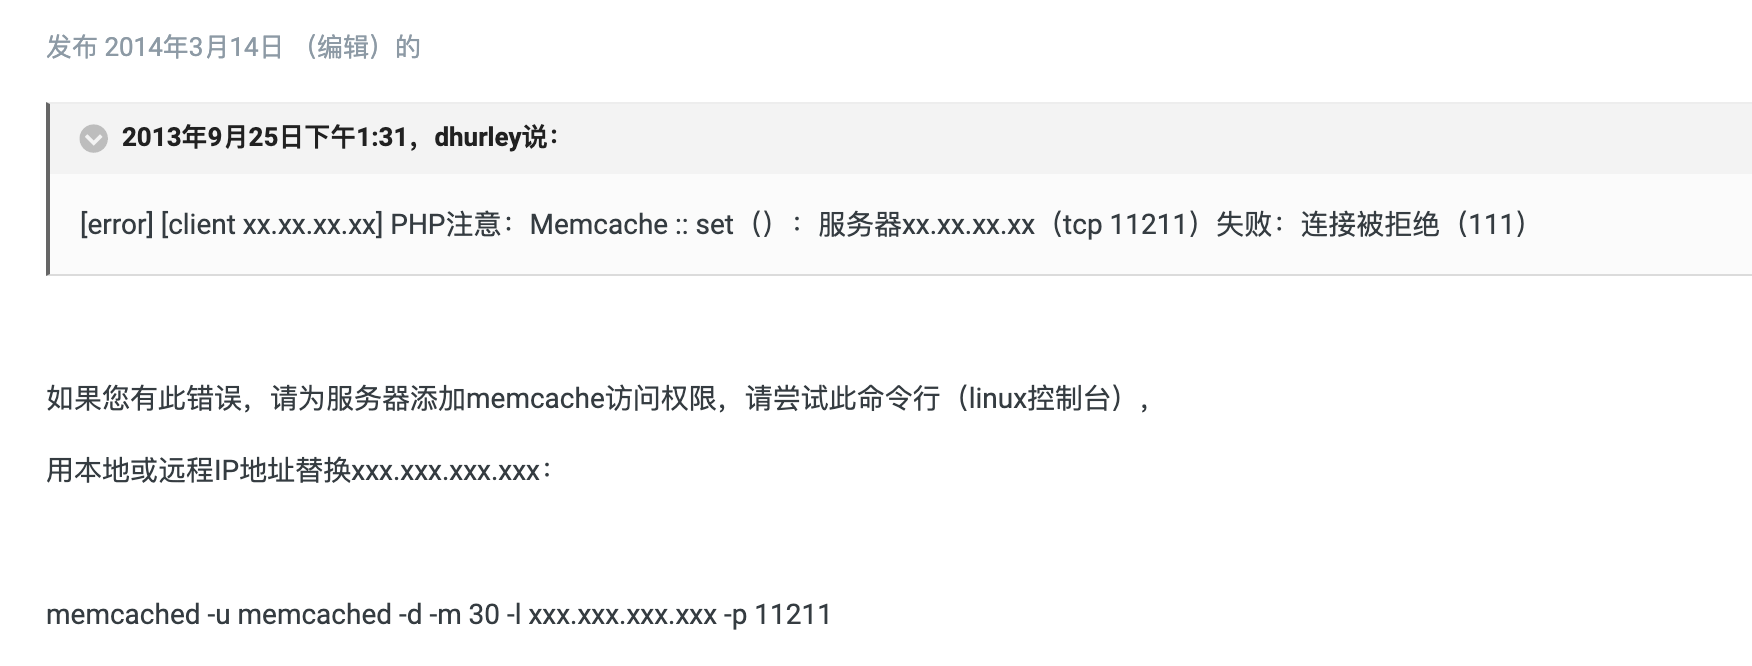 Linux 连接memcache 拒绝连接,防火墙关闭,selinux disabled 仍然不行,最后在外站找到原因,为服务器添加memcache访问权限...[通俗易懂]